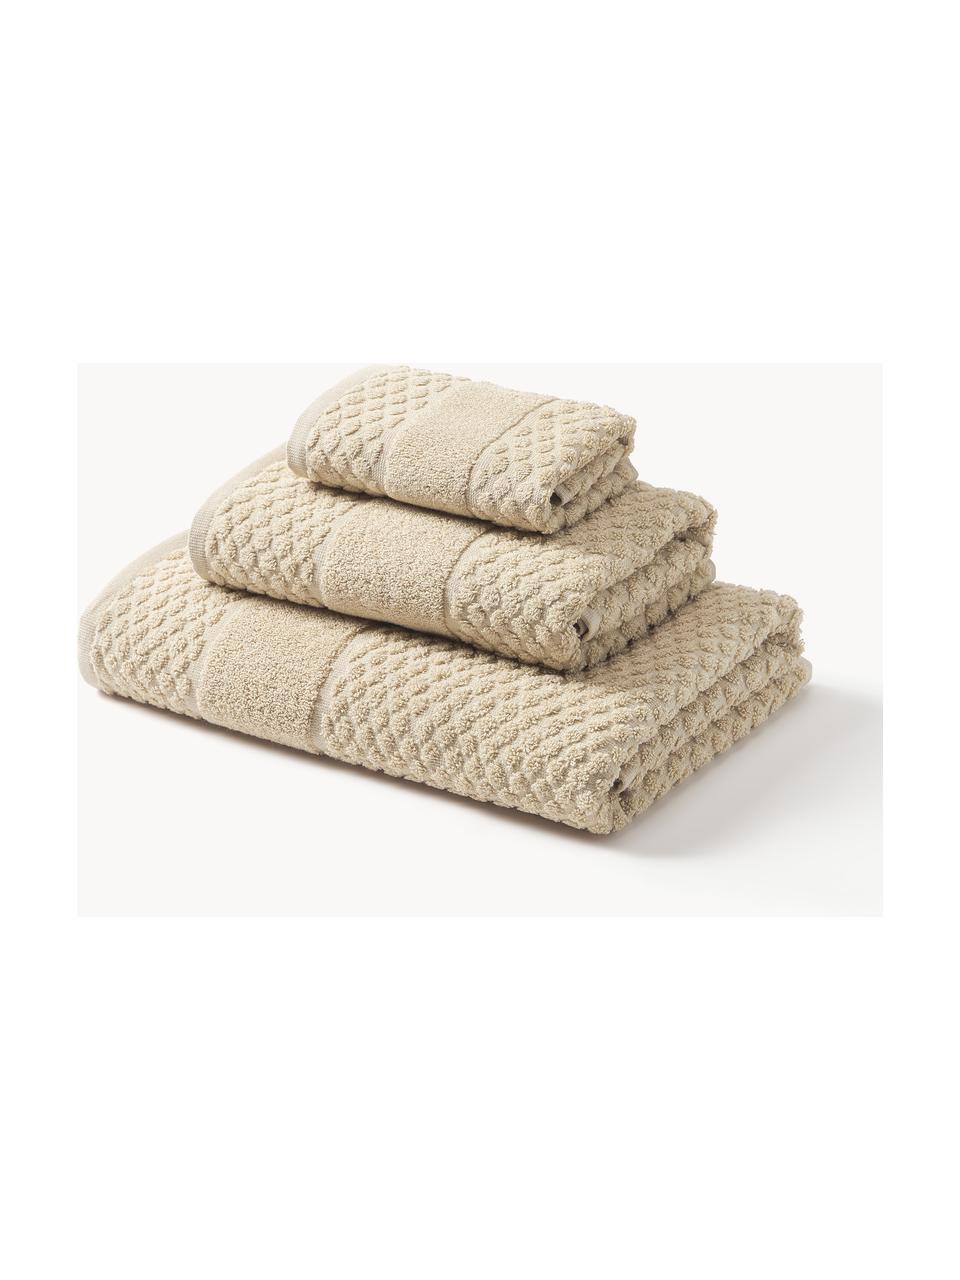 Set de toallas texturizada Katharina, tamaños diferentes, Beige, Set de 3 (toalla tocador, toalla lavabo y toalla ducha)